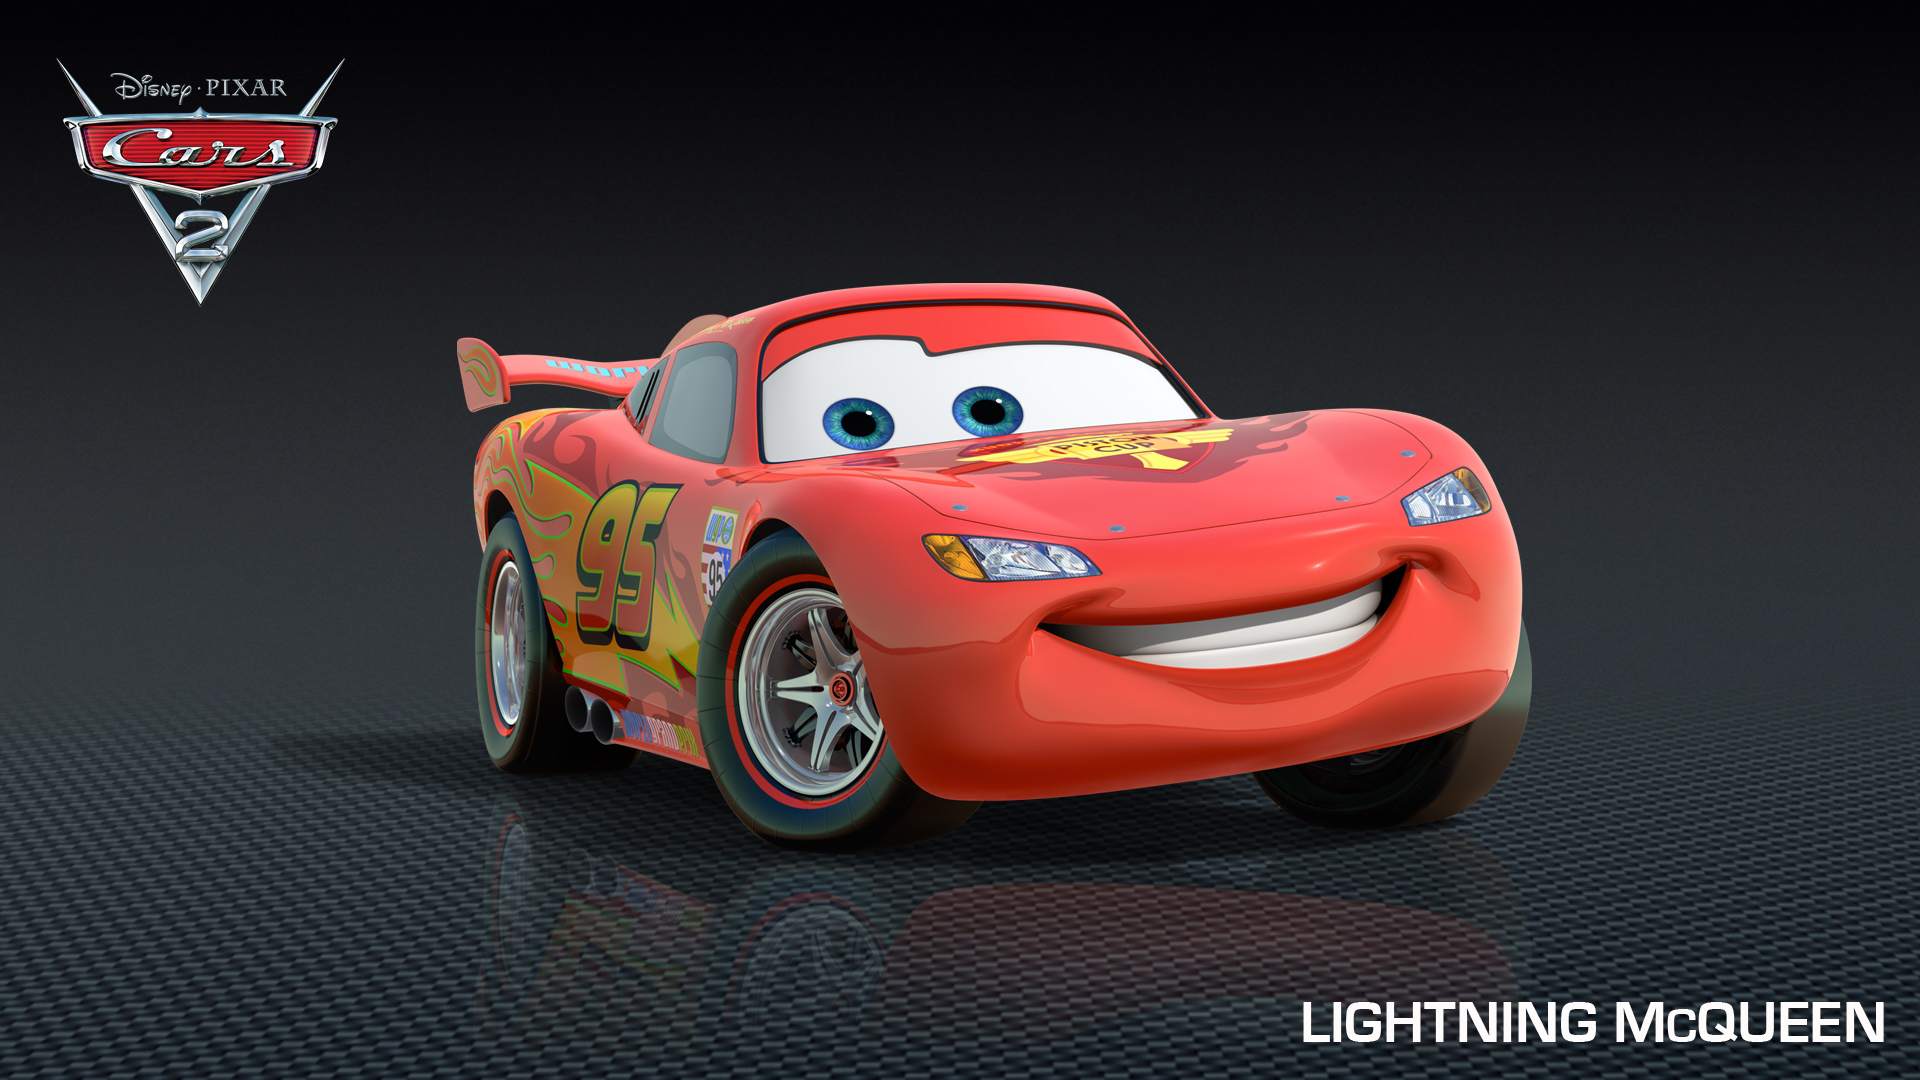 Disney Cars Movie Logo - Cars 2 Characters in Disney Pixar Cars 2